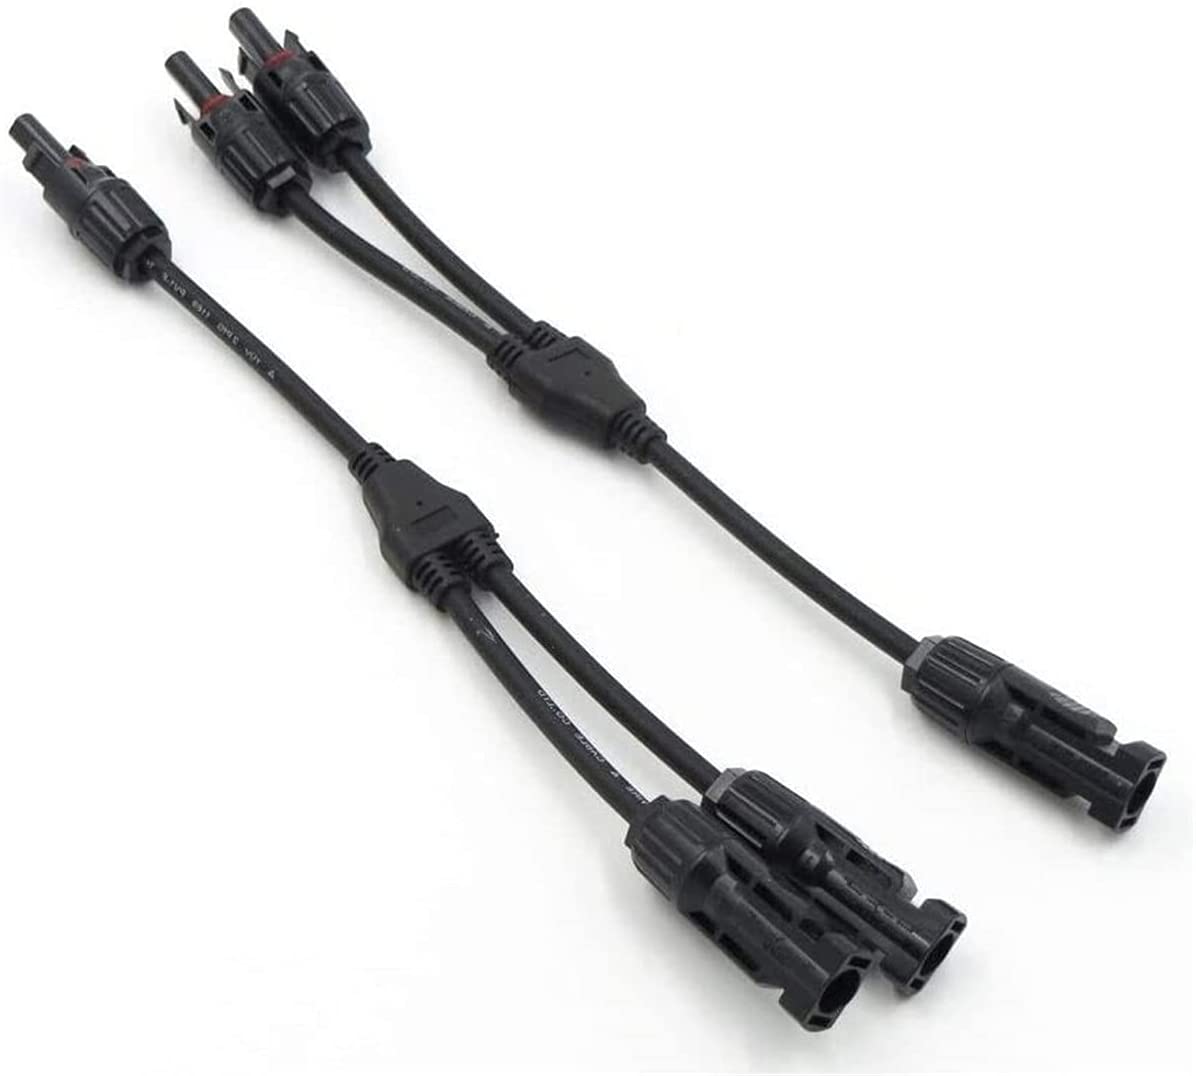 MC4 Branch Y connector per pair with cable